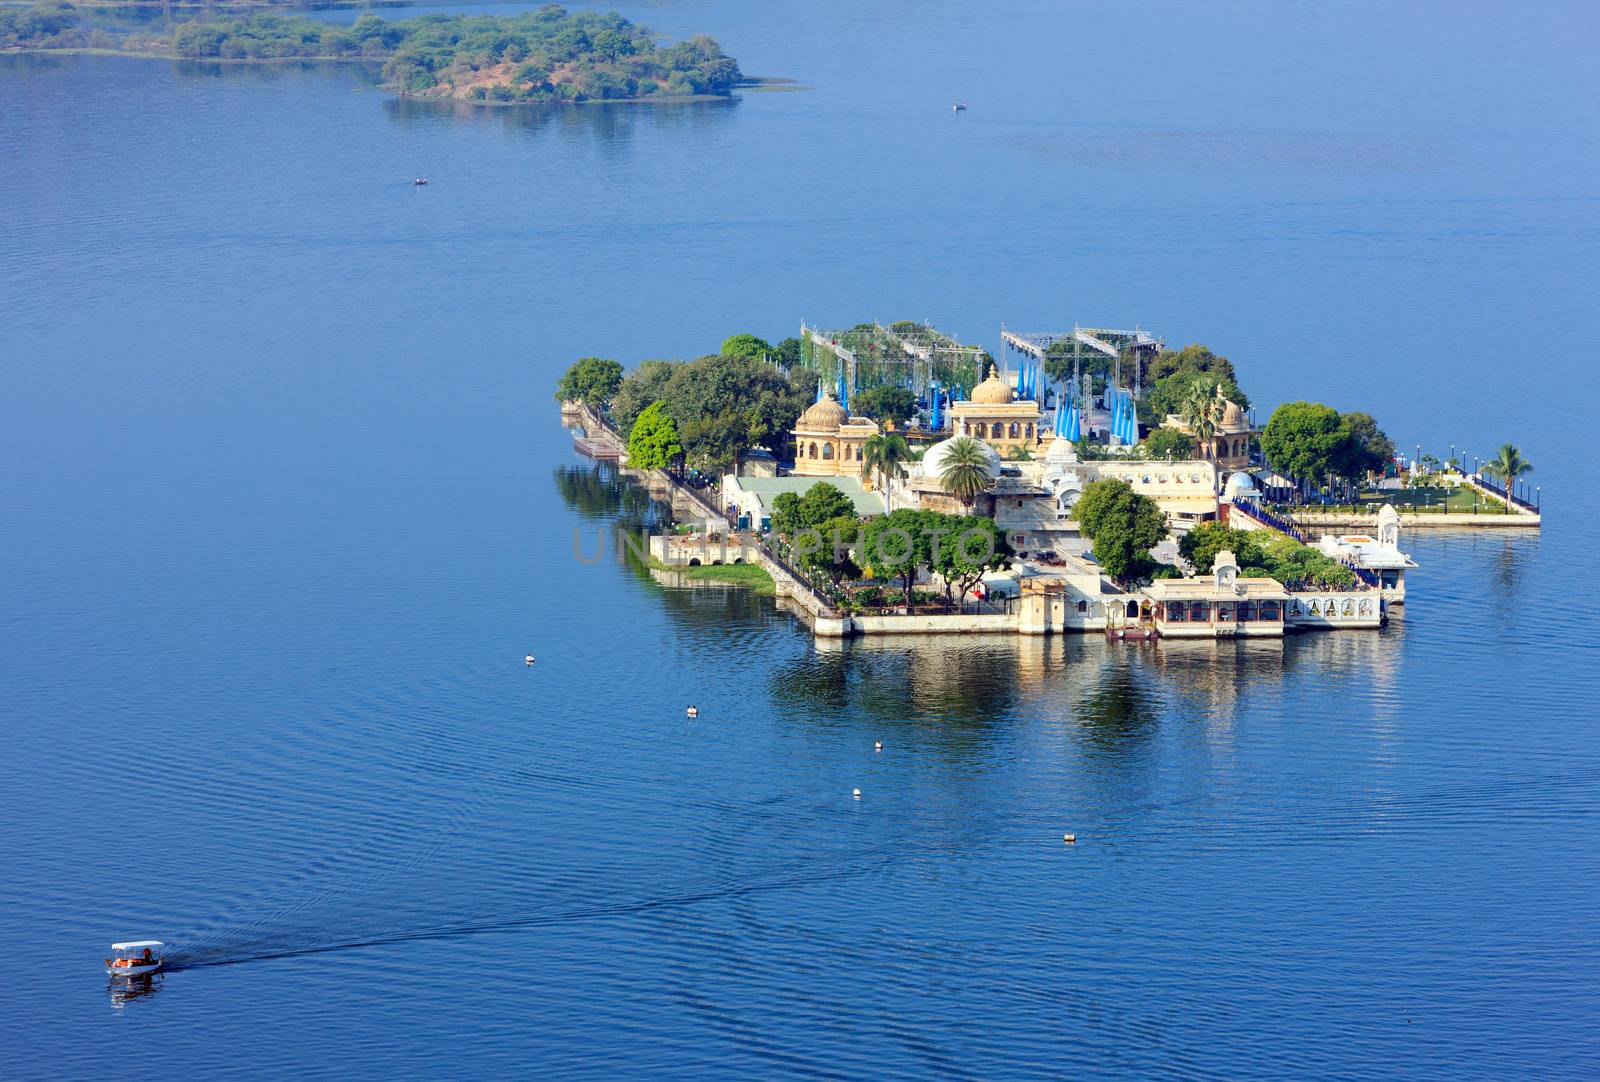 Jag Mandir Palace, Lake Pichola, Udaipur, Rajasthan, India, Asia